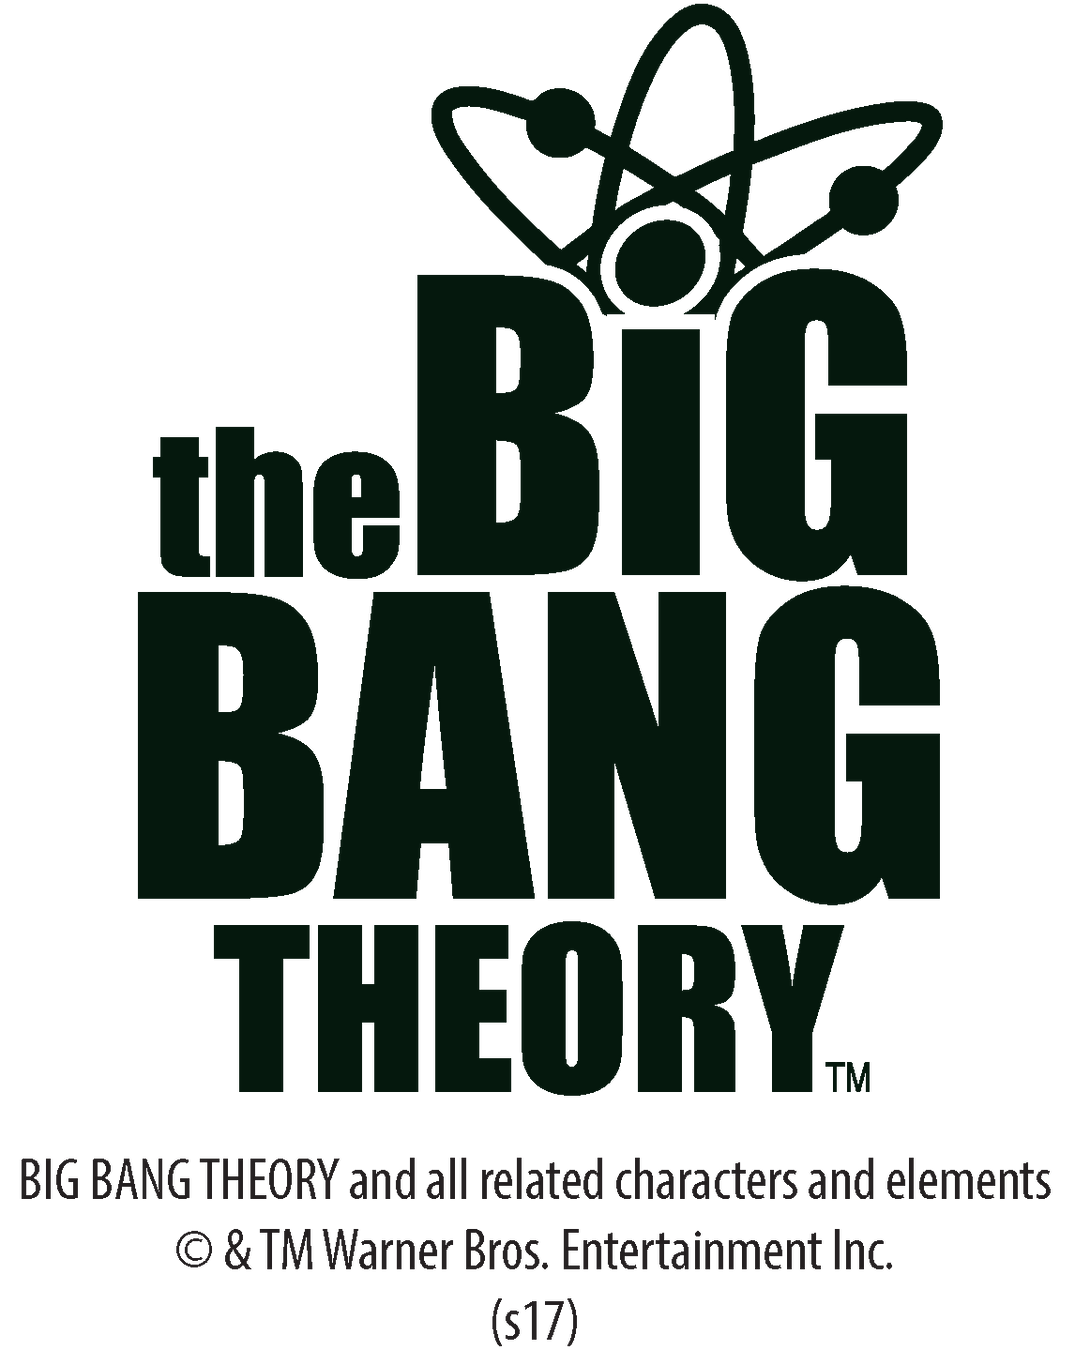 Big Bank Theory Neck Print